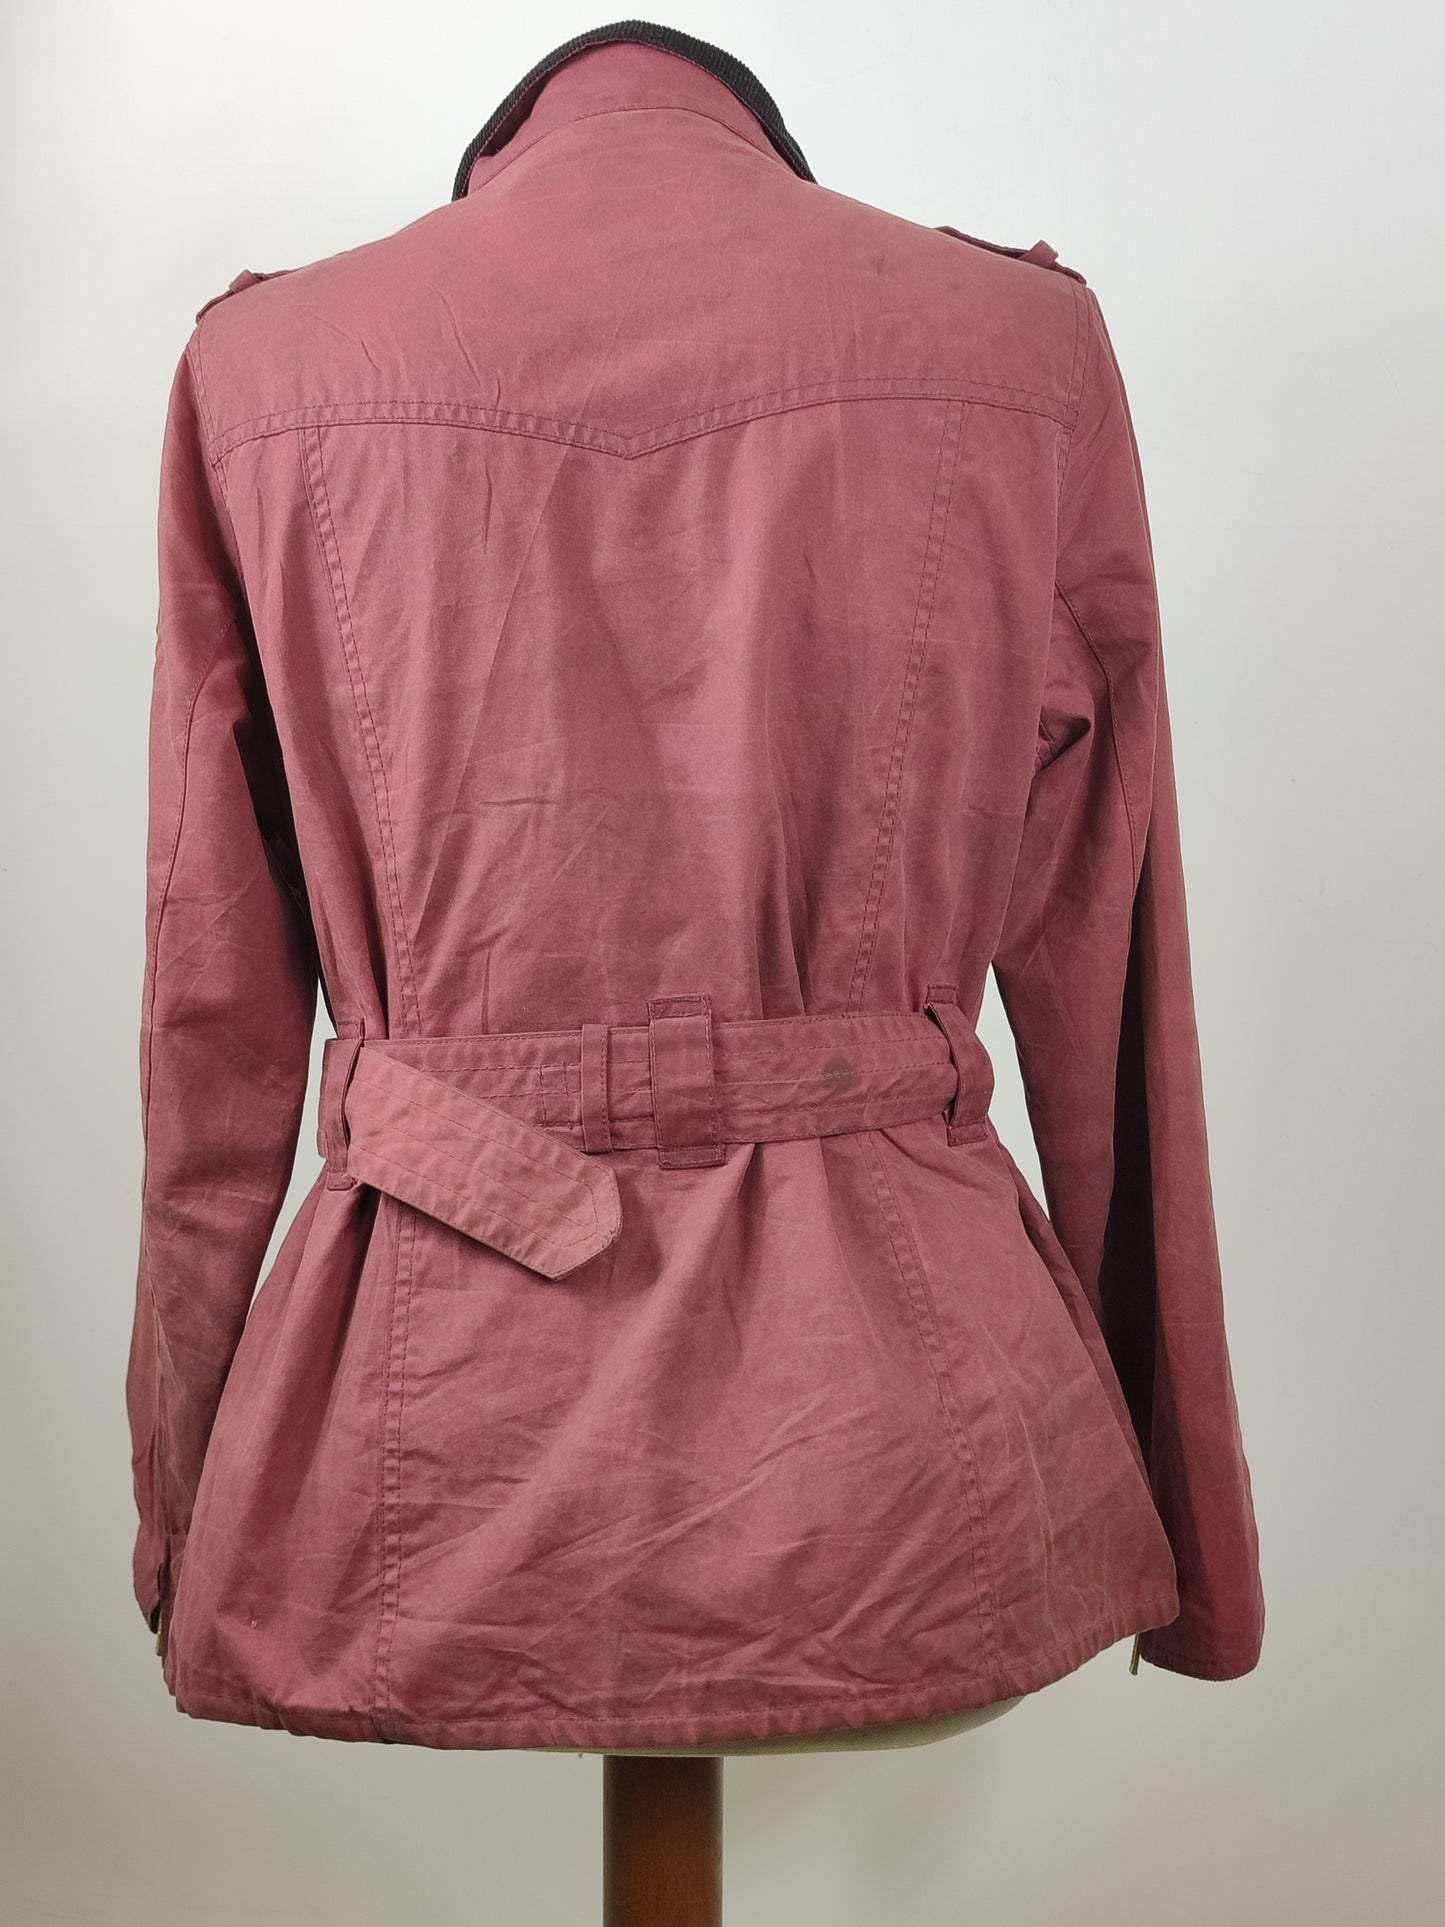 Giacca Barbour International da donna rosa Uk12 Medium- Lady International pink wax jacket size UK12